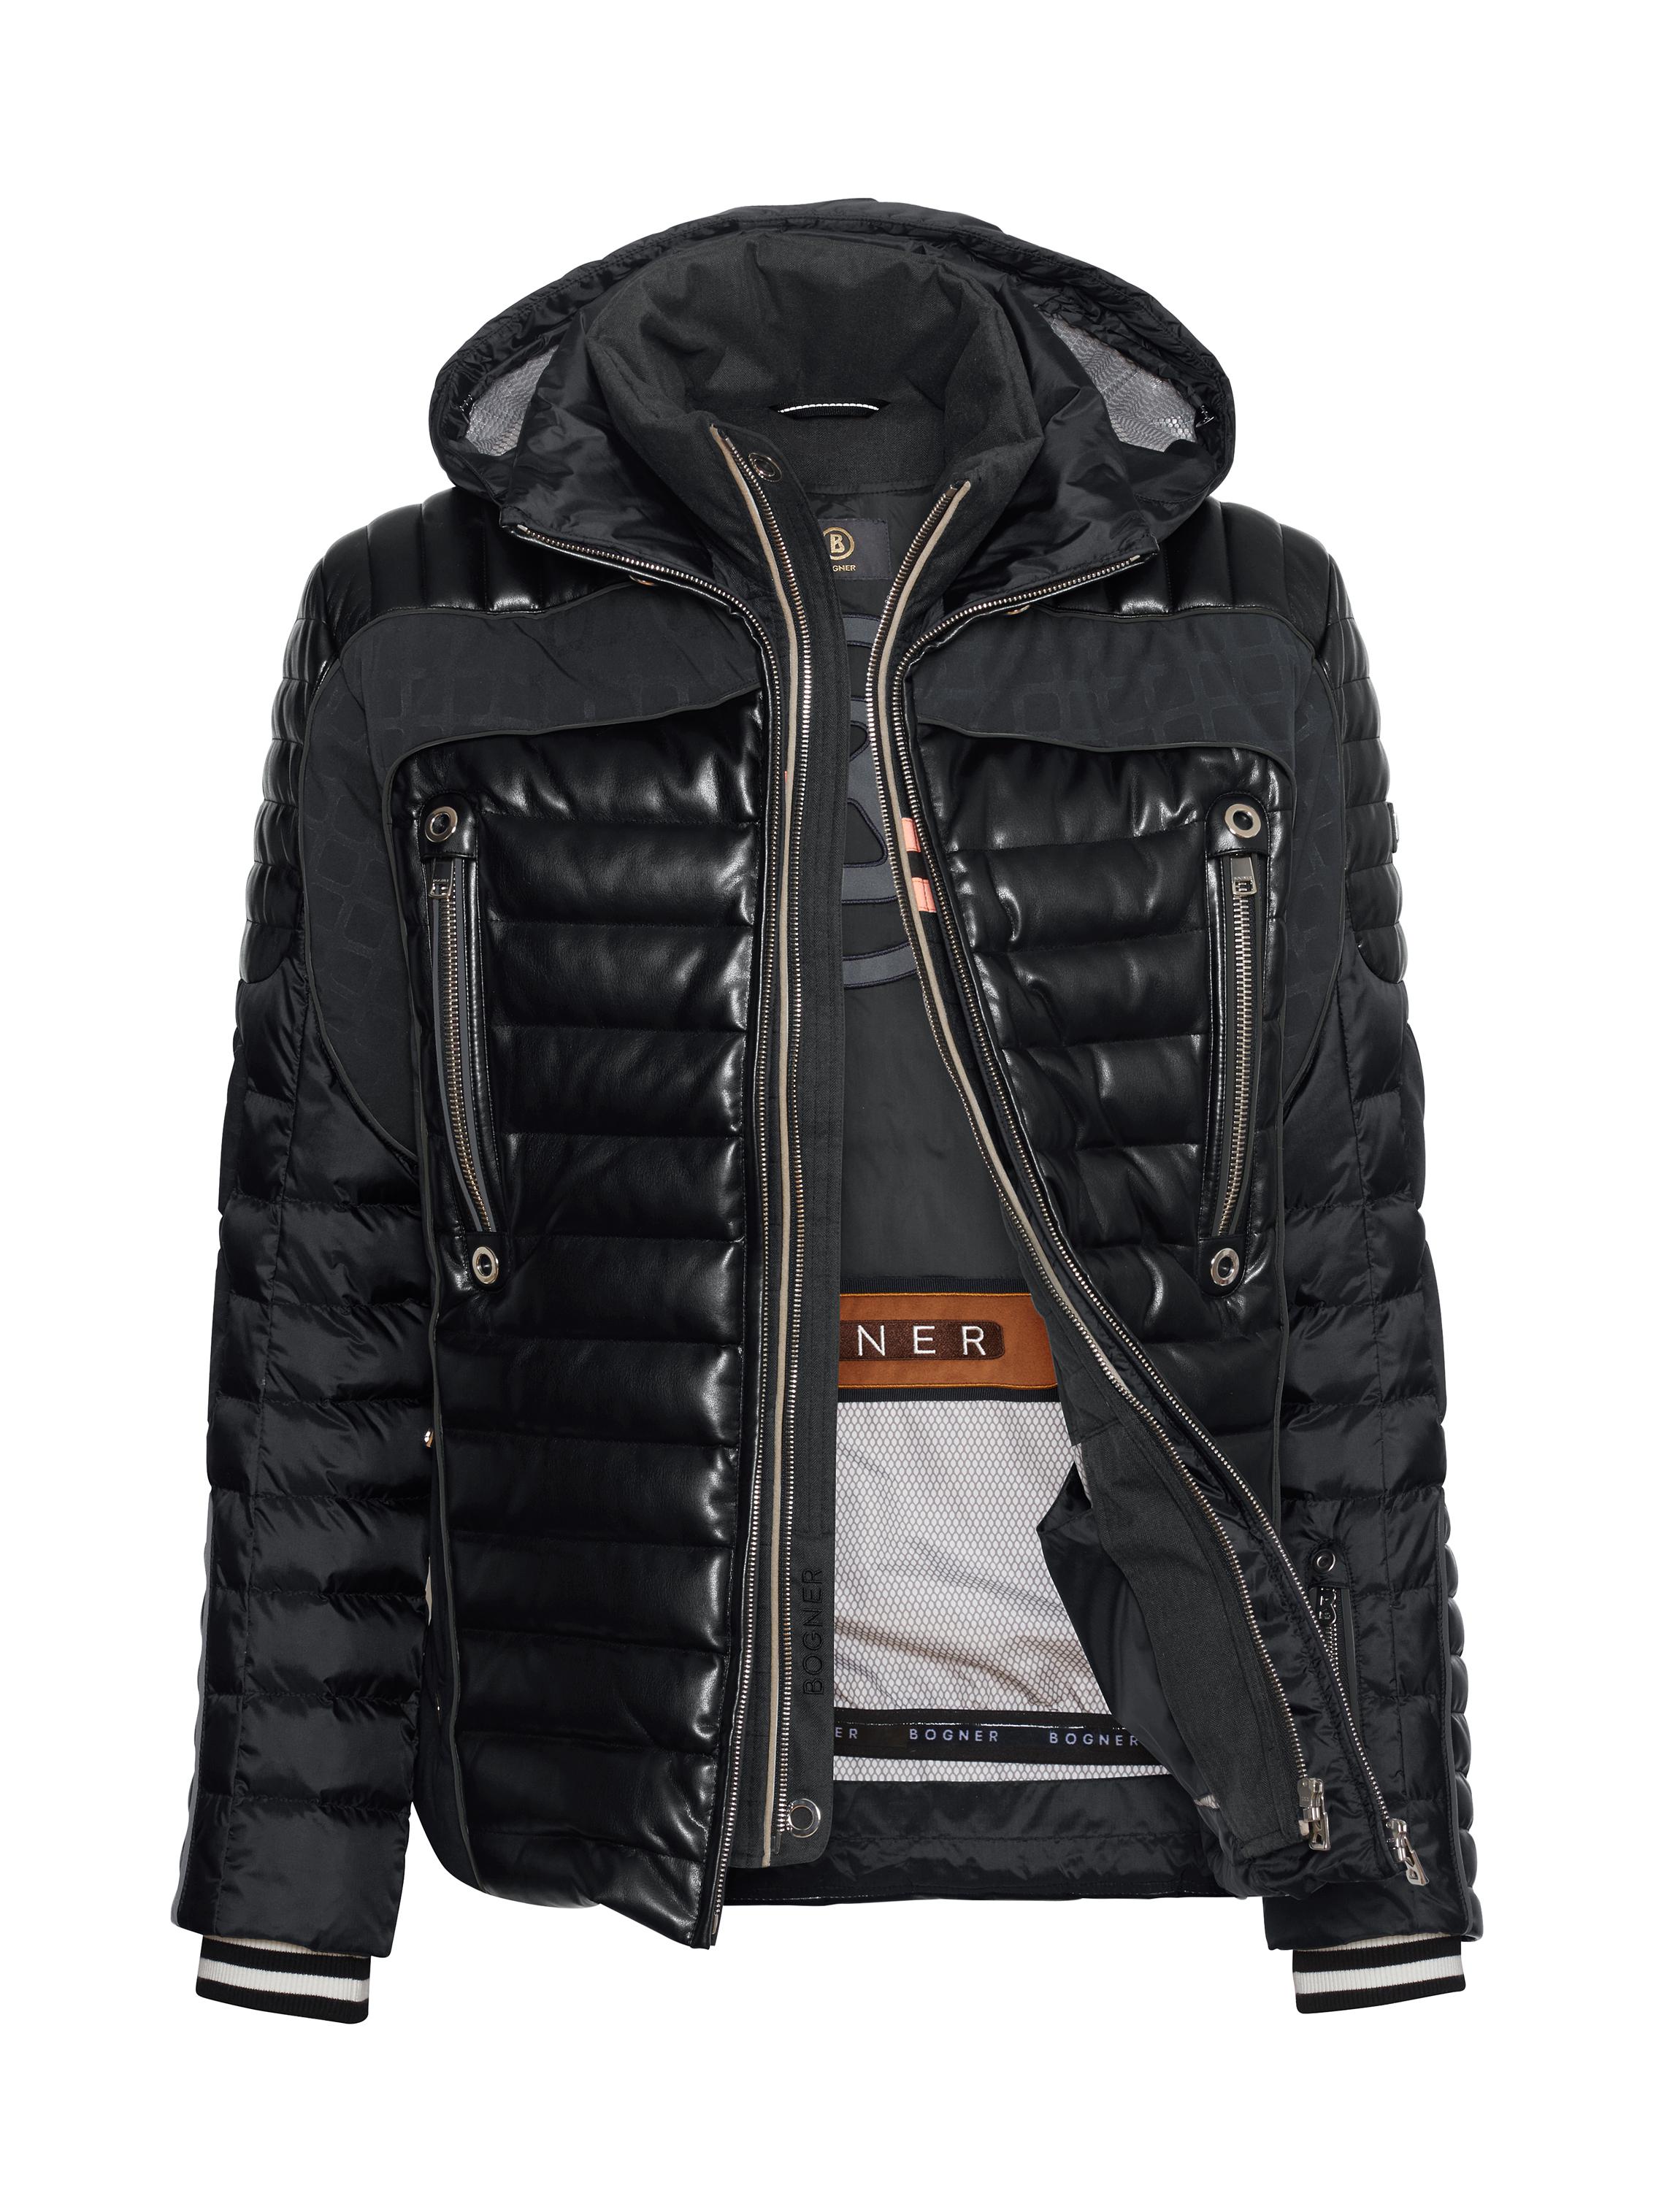 Bogner Leather Ski Down Jacket Vito in Black for Men - Lyst